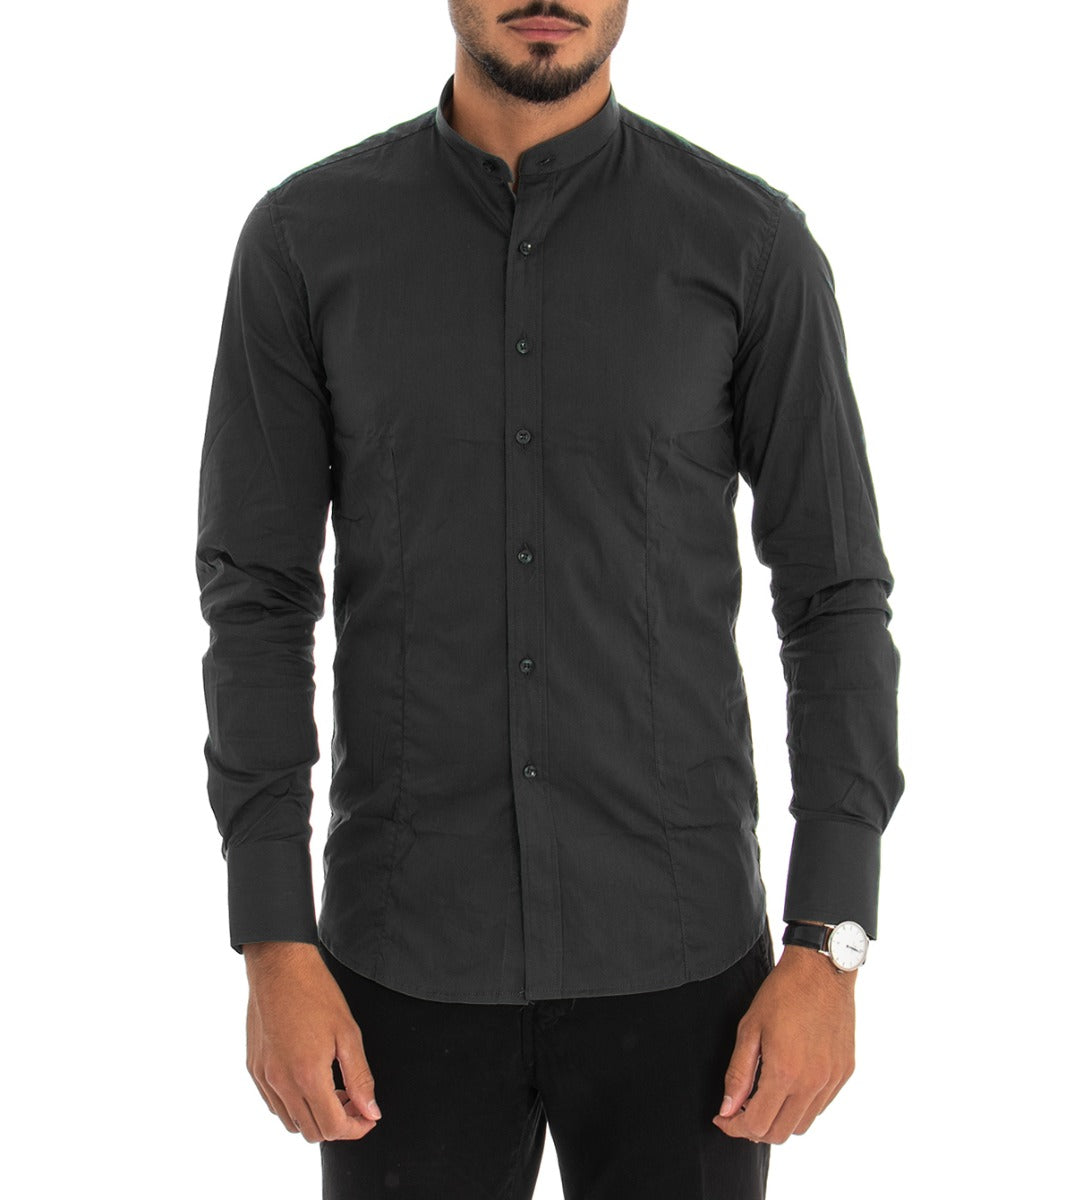 Men's Mandarin Collar Shirt Long Sleeve Slim Fit Basic Casual Black Cotton GIOSAL-C1820A